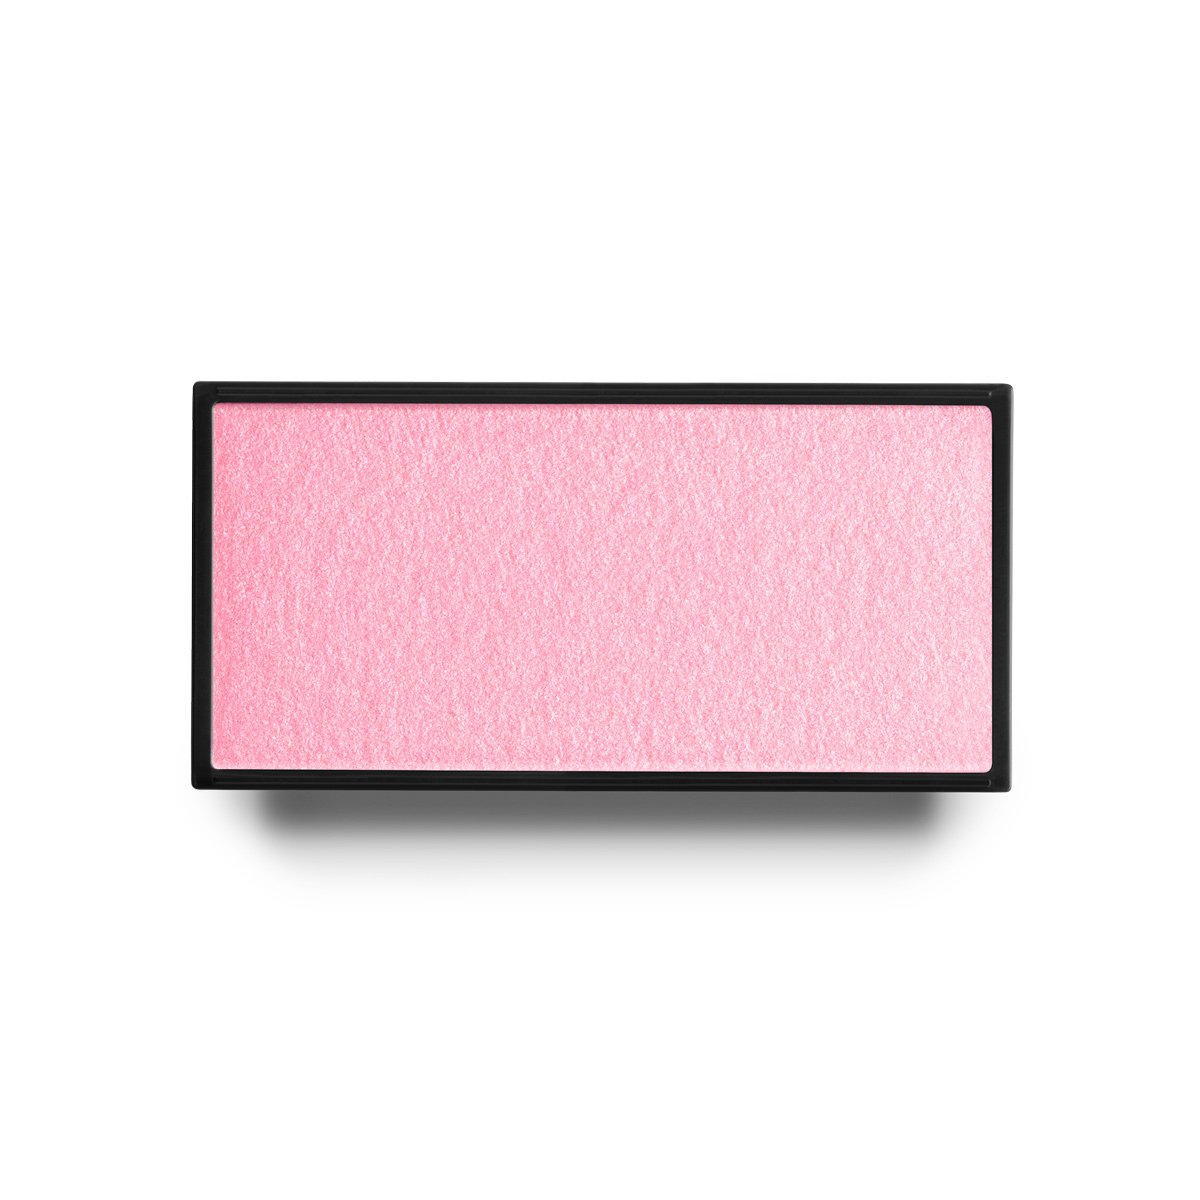 BARBE A PAPA - COOL BRIGHT PINK - shimmer finish powder blush in cool bright pink shade